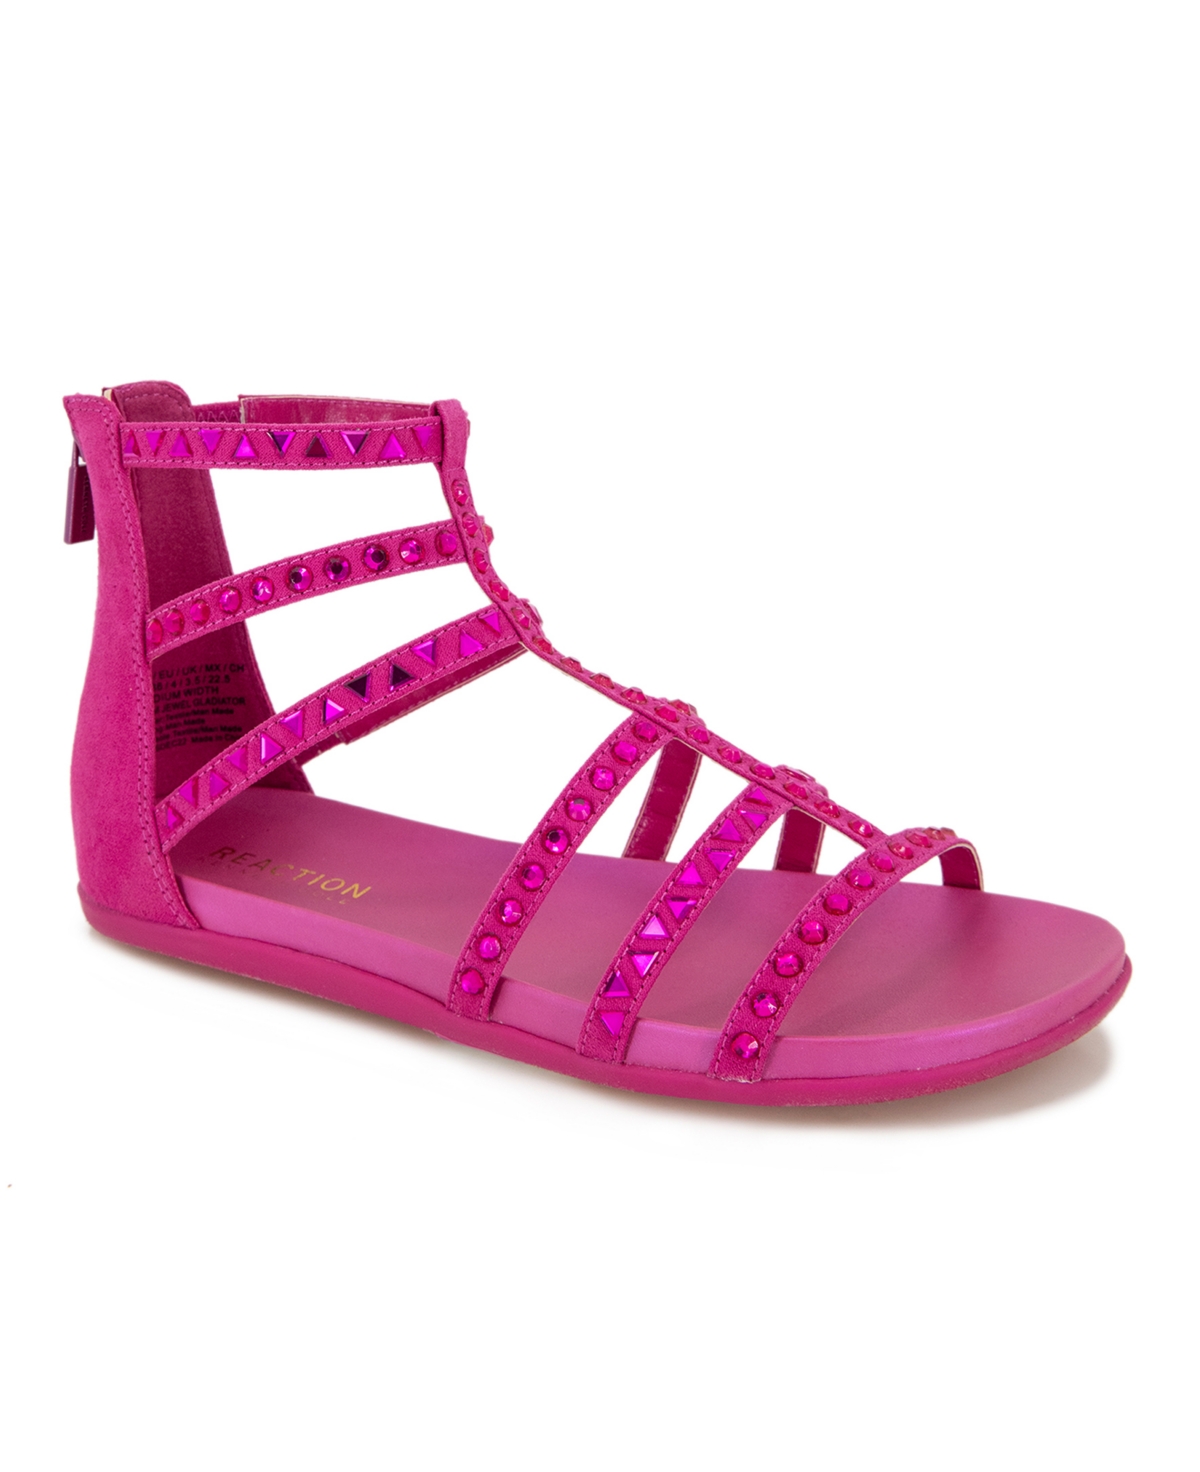 Women's Slim Jewel Gladiator Flat Sandals - Bright Pink